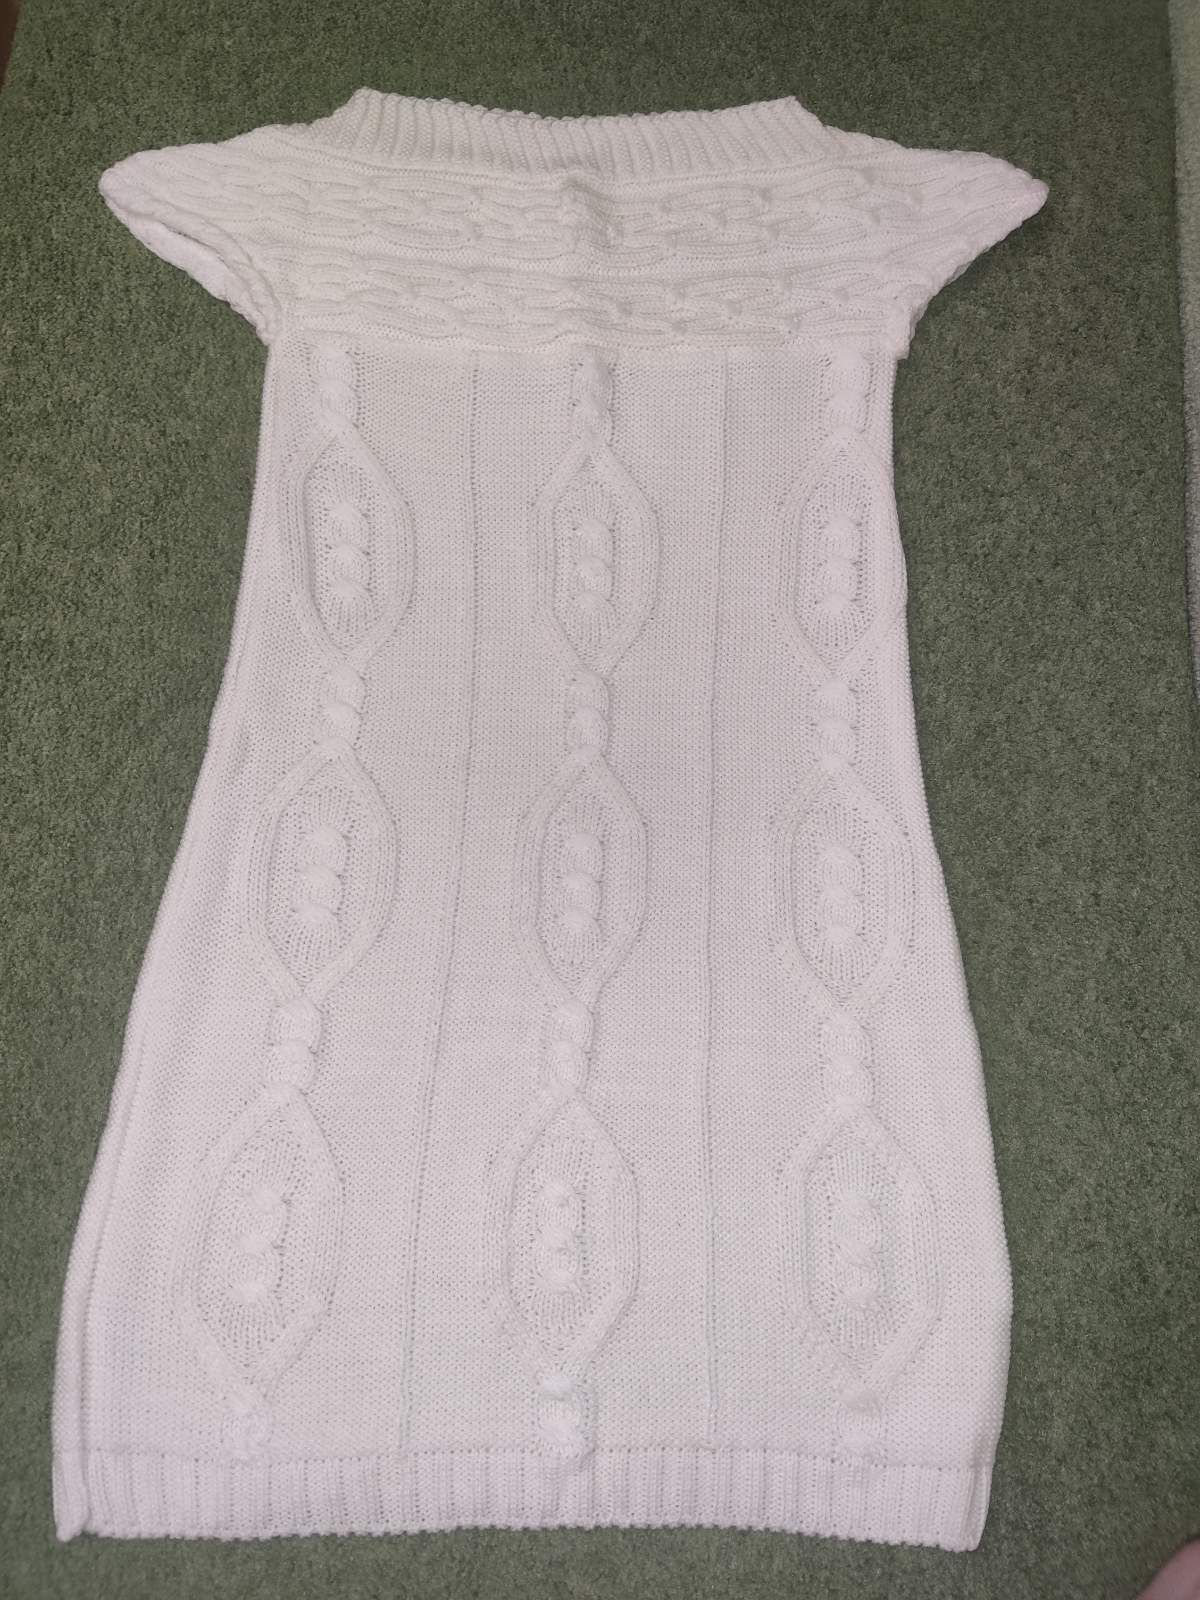 Белое платье туника